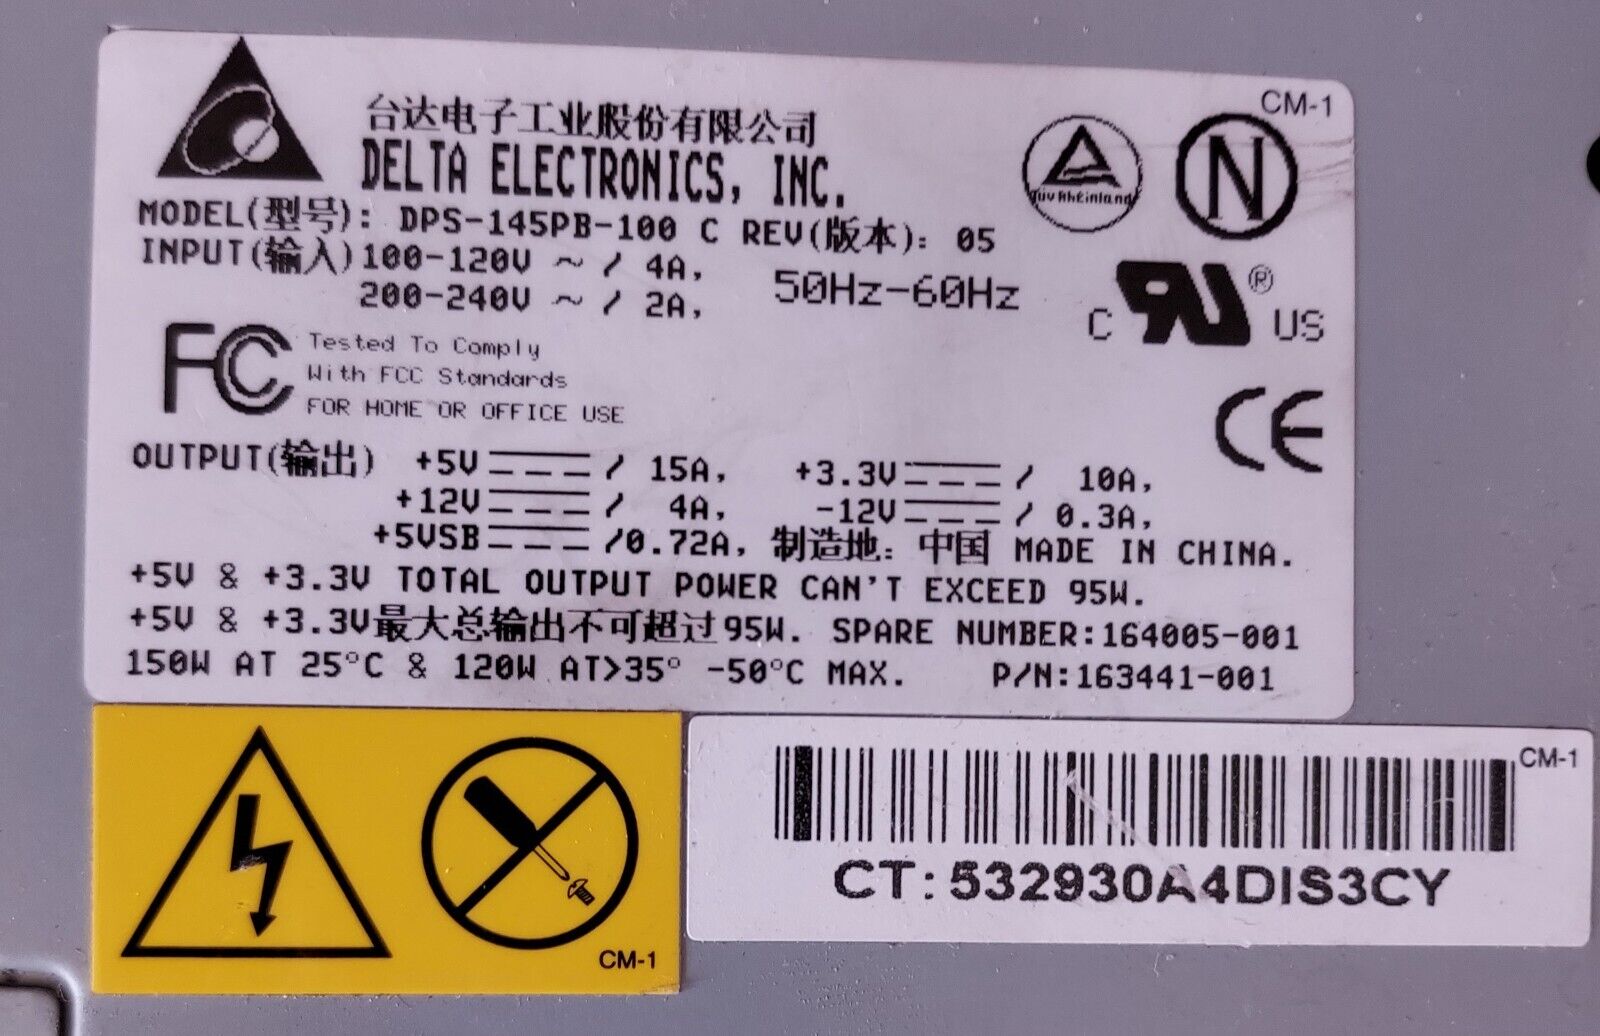 Delta Electronics Model DPS-145PB-100 C Rev 5  p/n163441-001